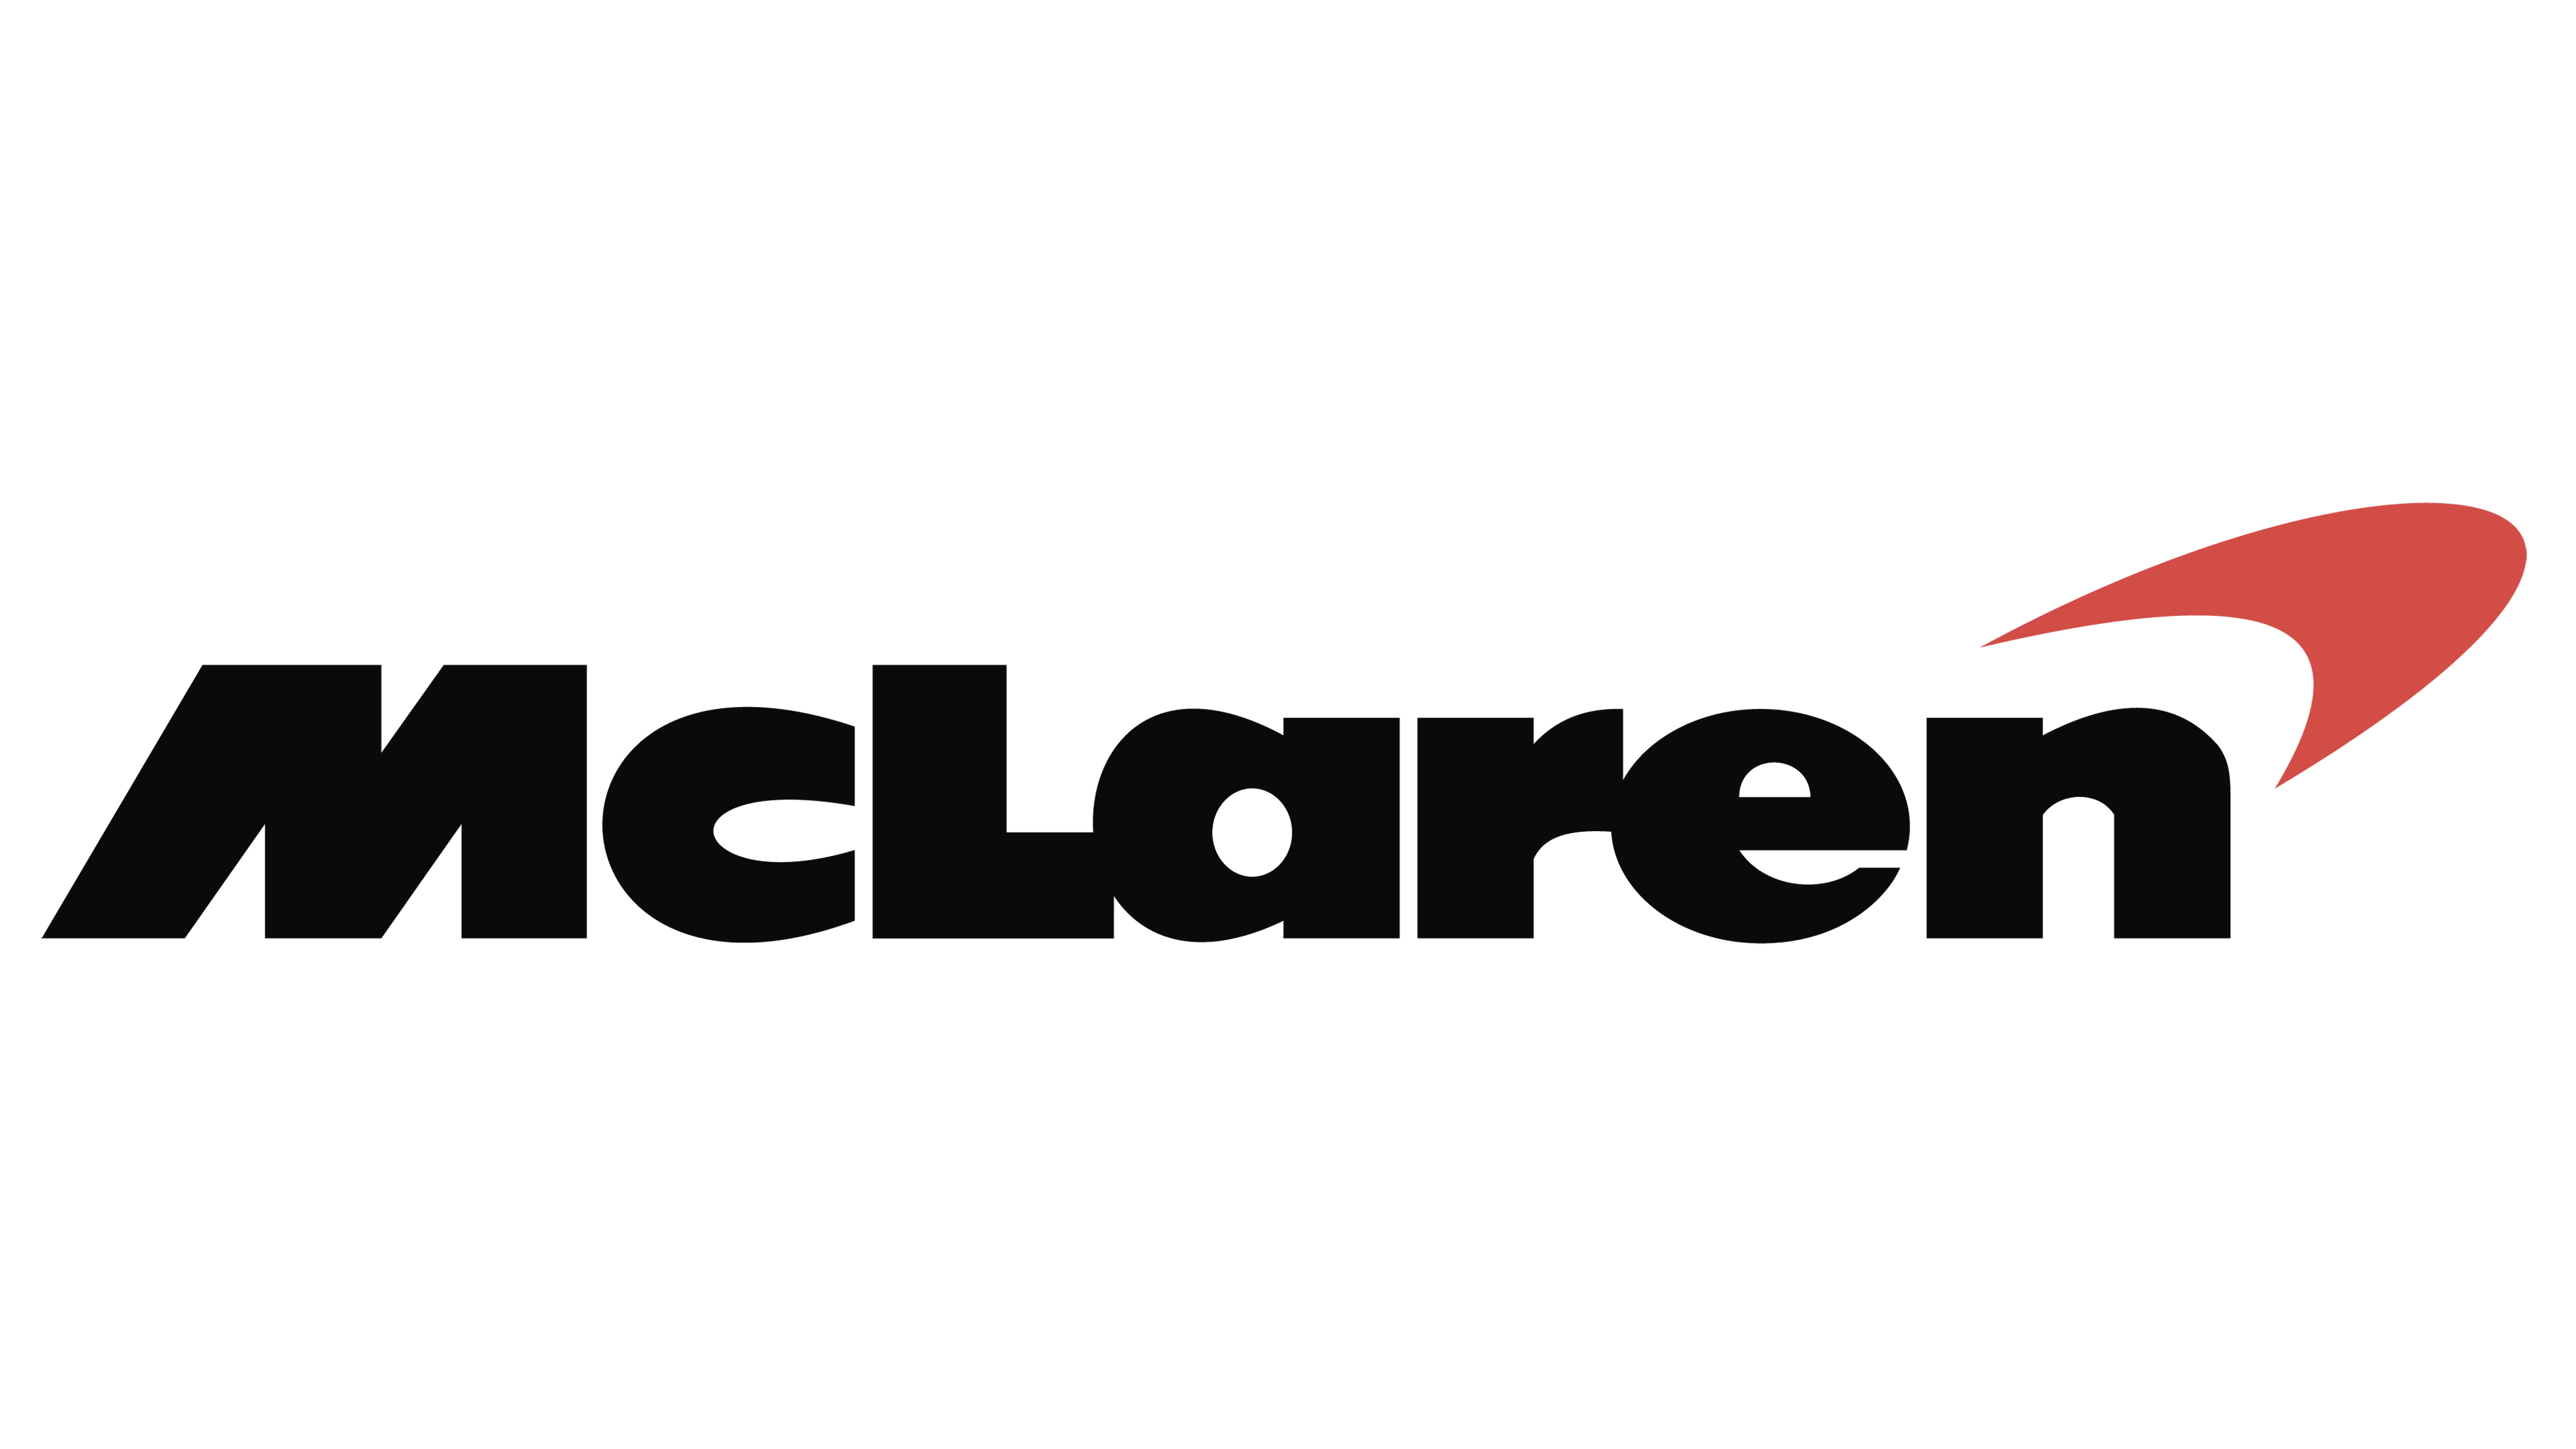 Mclaren Logo PNG Image in Transparent pngteam.com